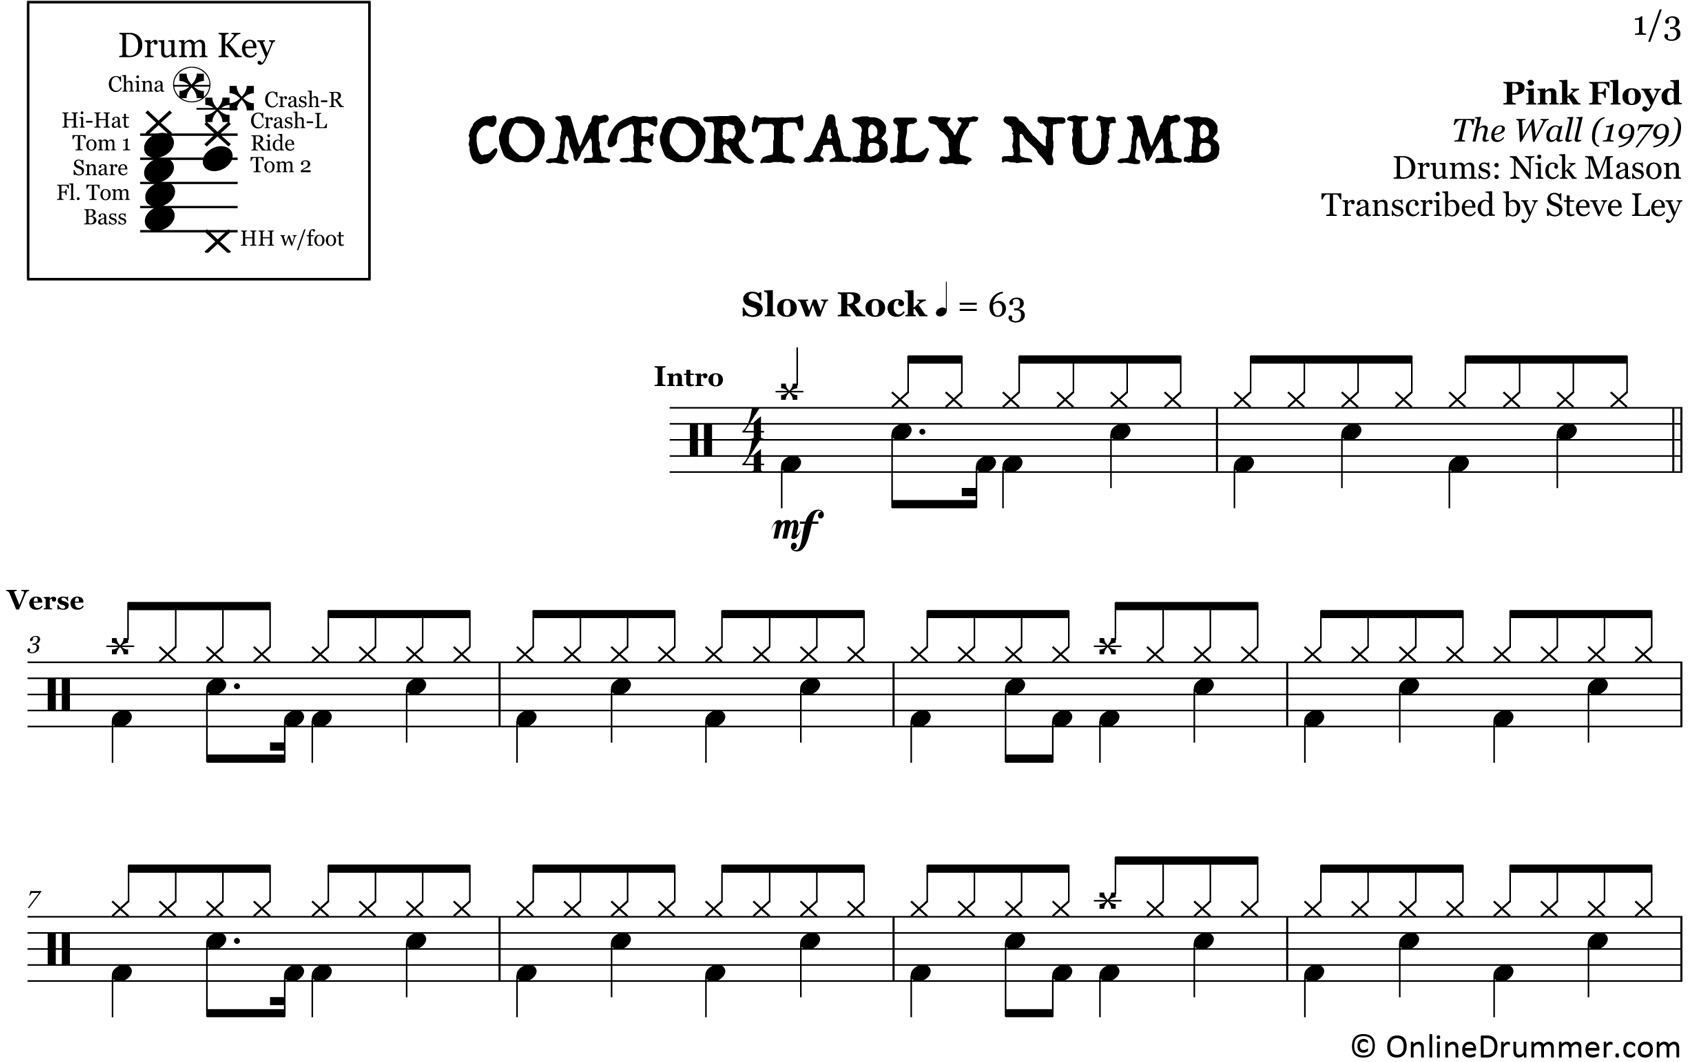 Comfortably Numb - Pink Floyd - Drum Sheet Music